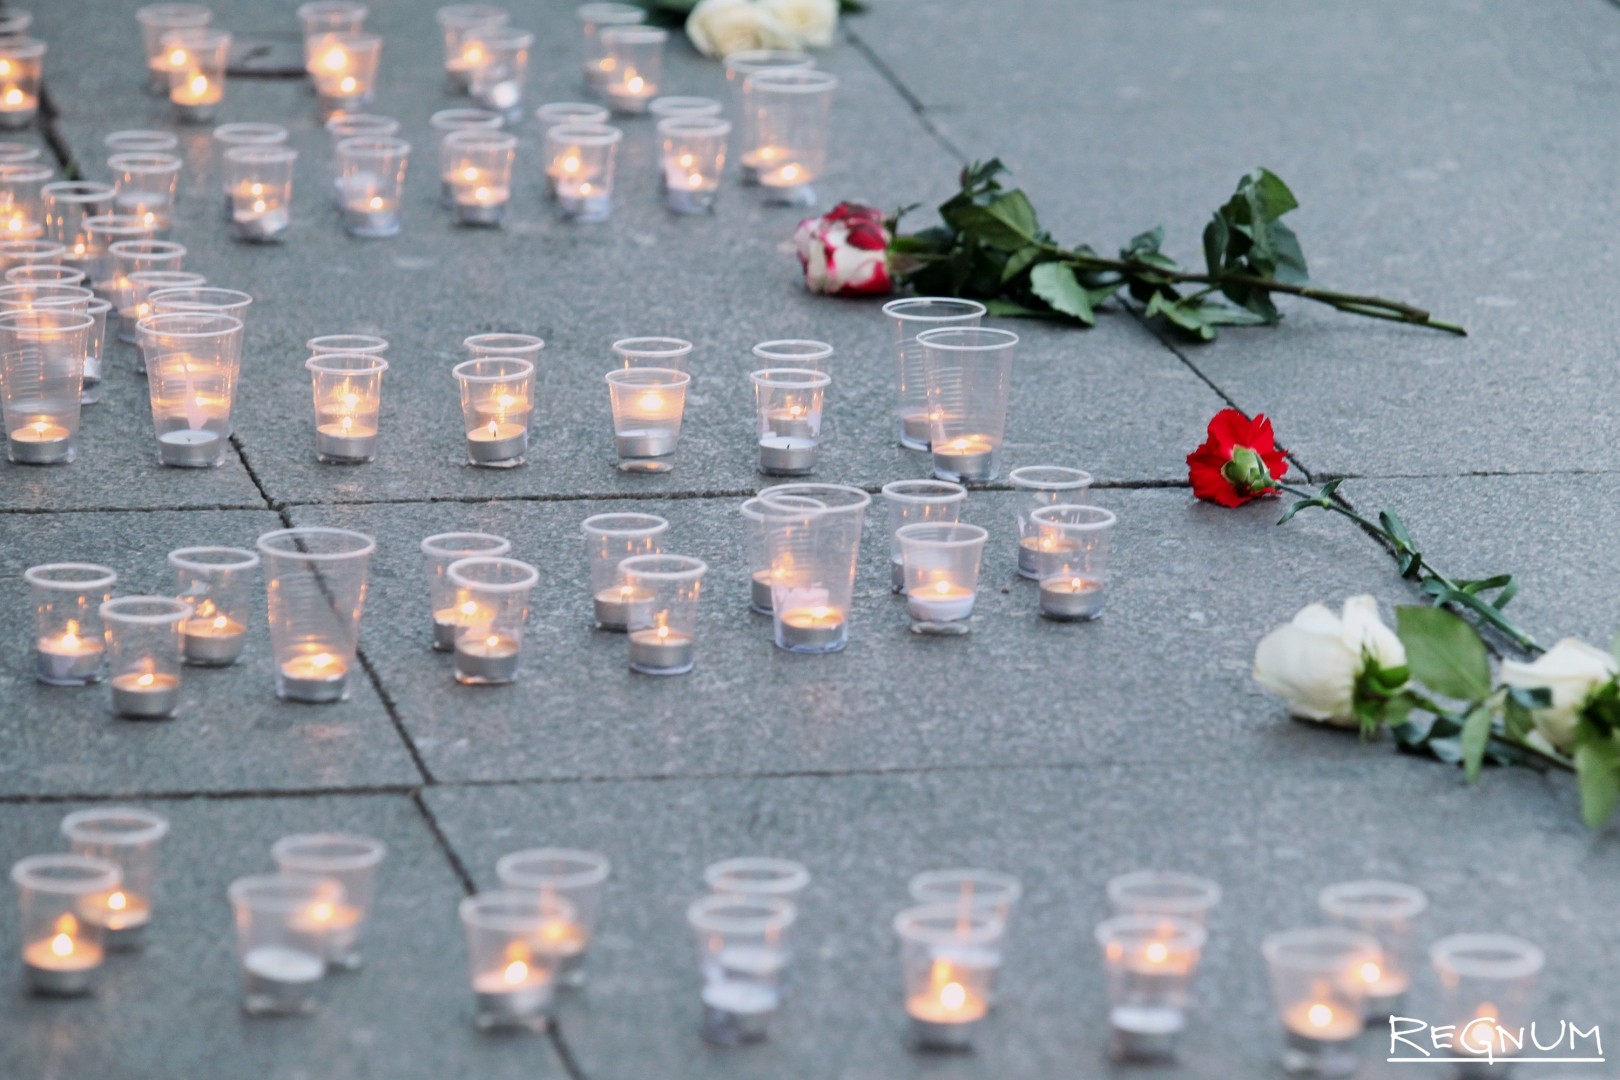 Памяти жертв терроризма